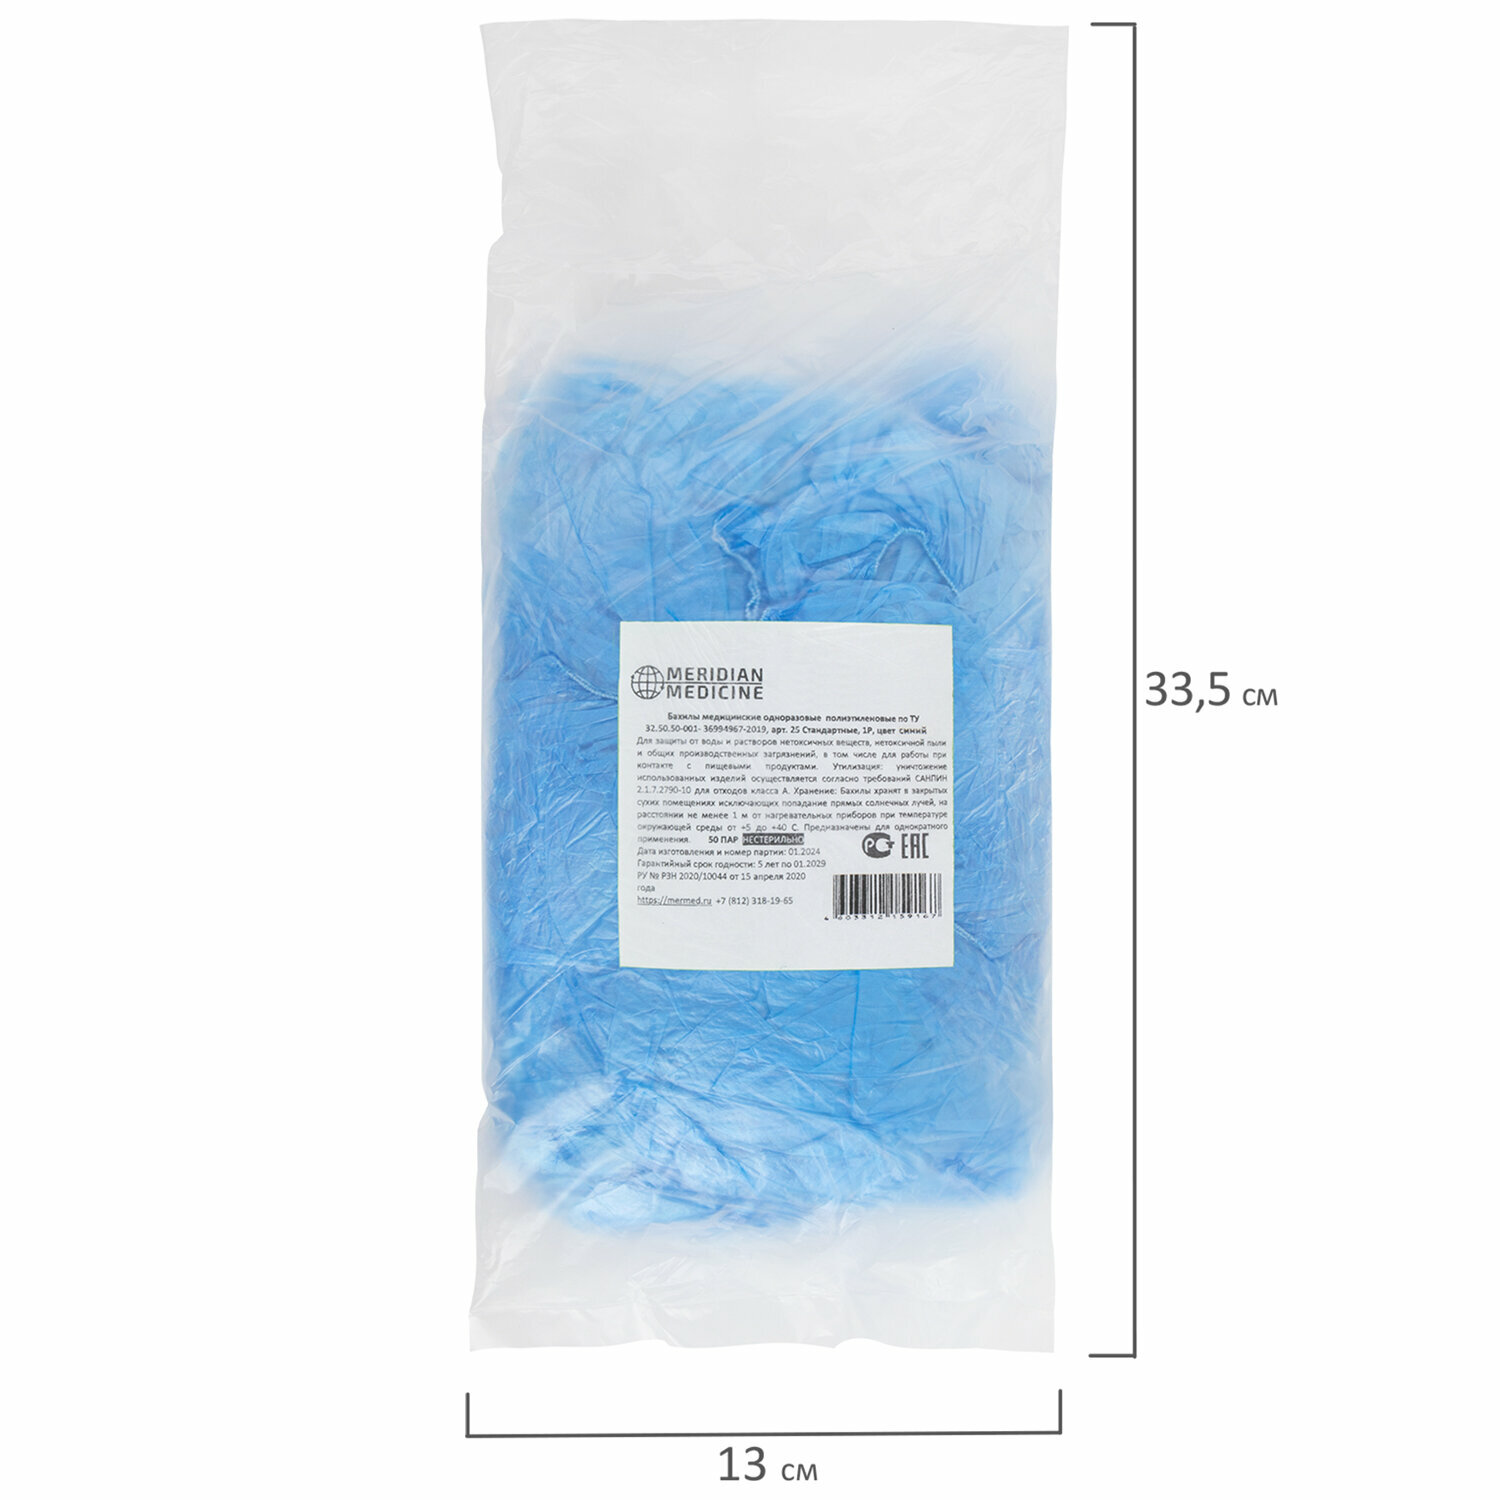 Бахилы MERIDIAN стандарт 2,3 грамма, синие, комплект 100 штук (50 пар), 40х15 см, ПНД упаковка 6 шт.